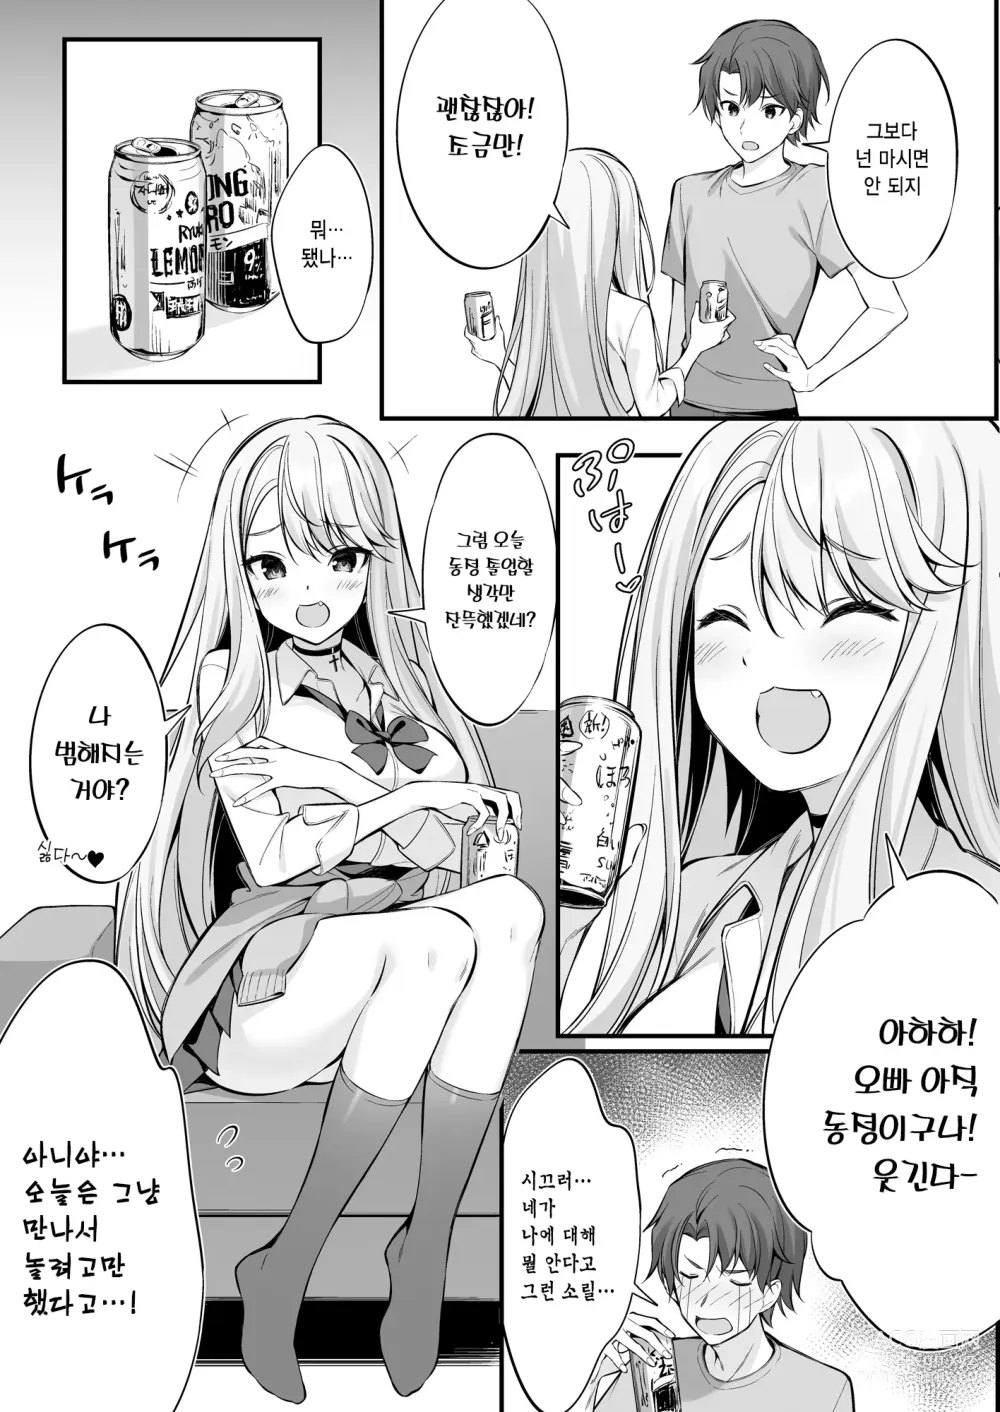 Page 6 of doujinshi SNS를 통해 만난 사람은 갸루가 된 여동생이었다